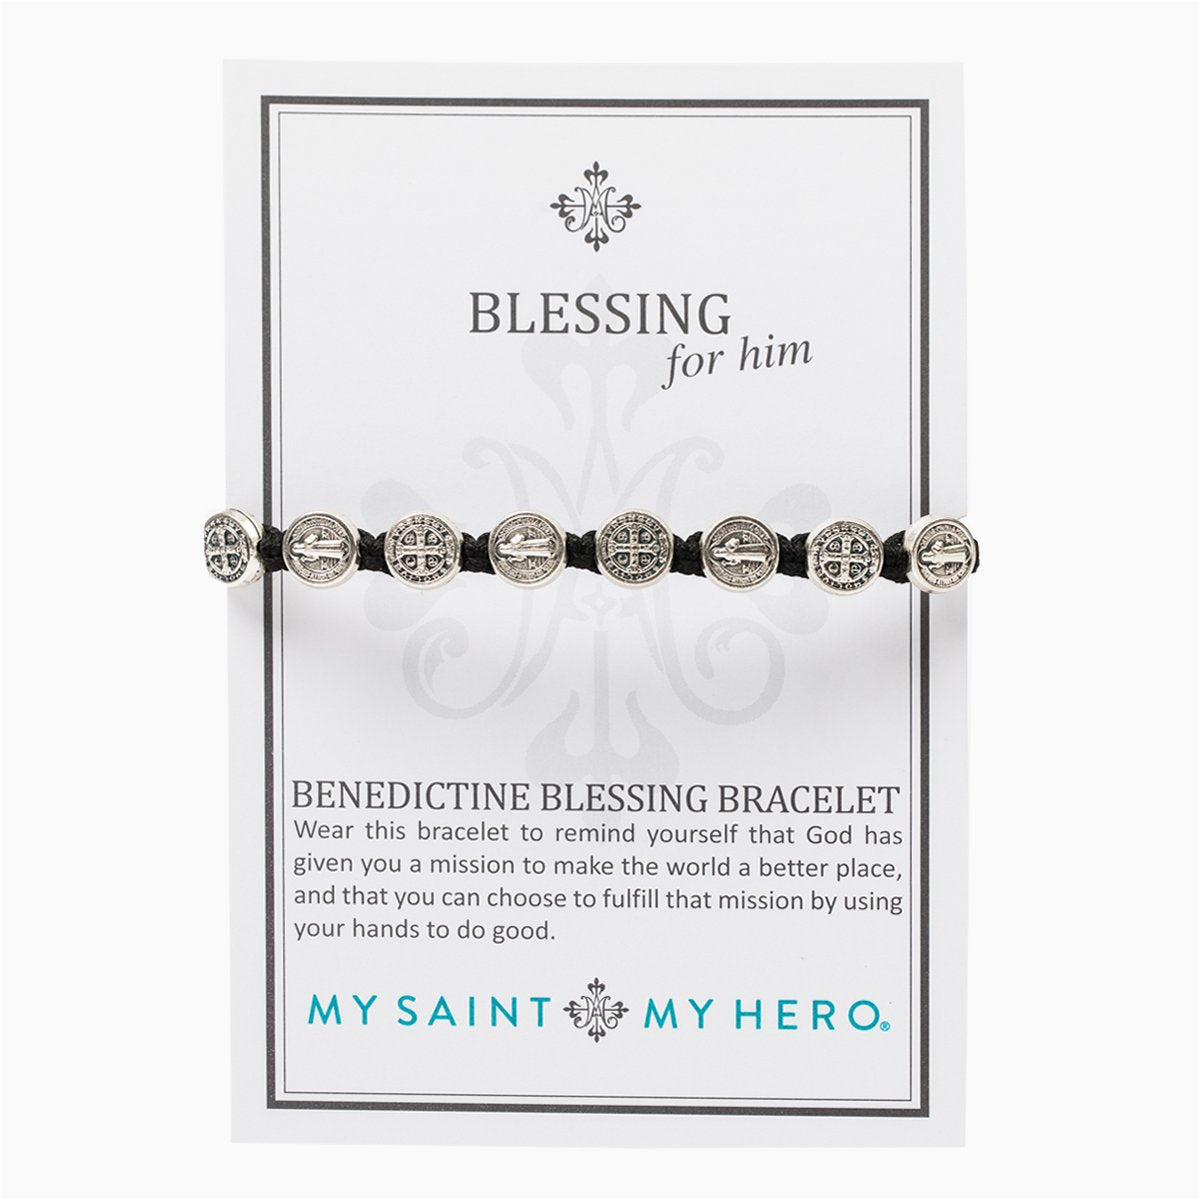 Benedictine Blessing Bracelet for Him by My Saint My Hero